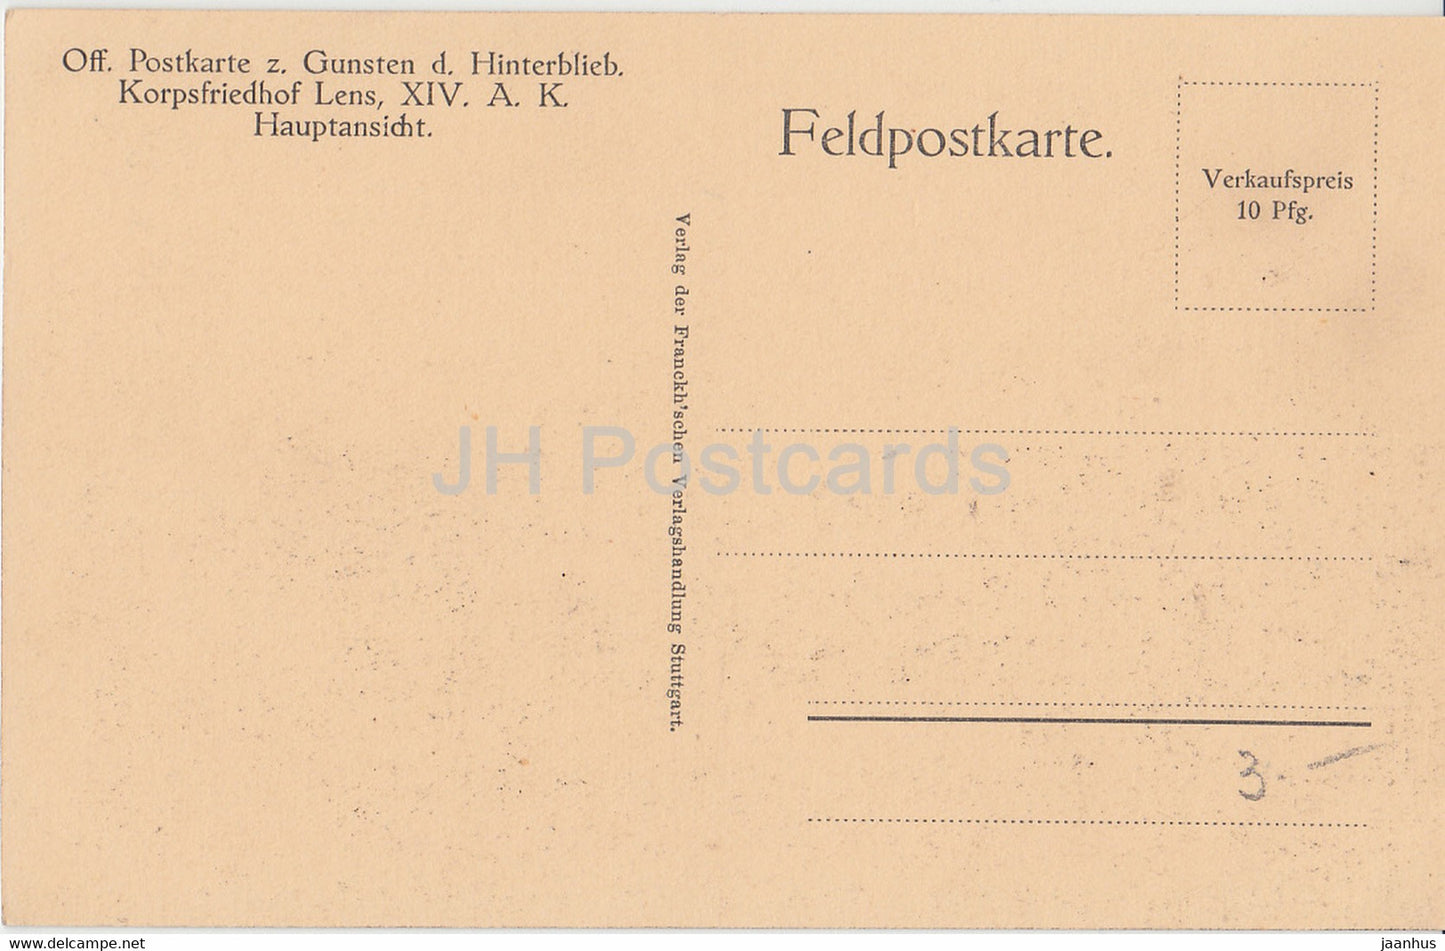 Off Postkarte z Gunsten d Hinterblieb - Korpsfriedhof Lens - Haupansicht - Feldpostkarte old postcard - France - unused